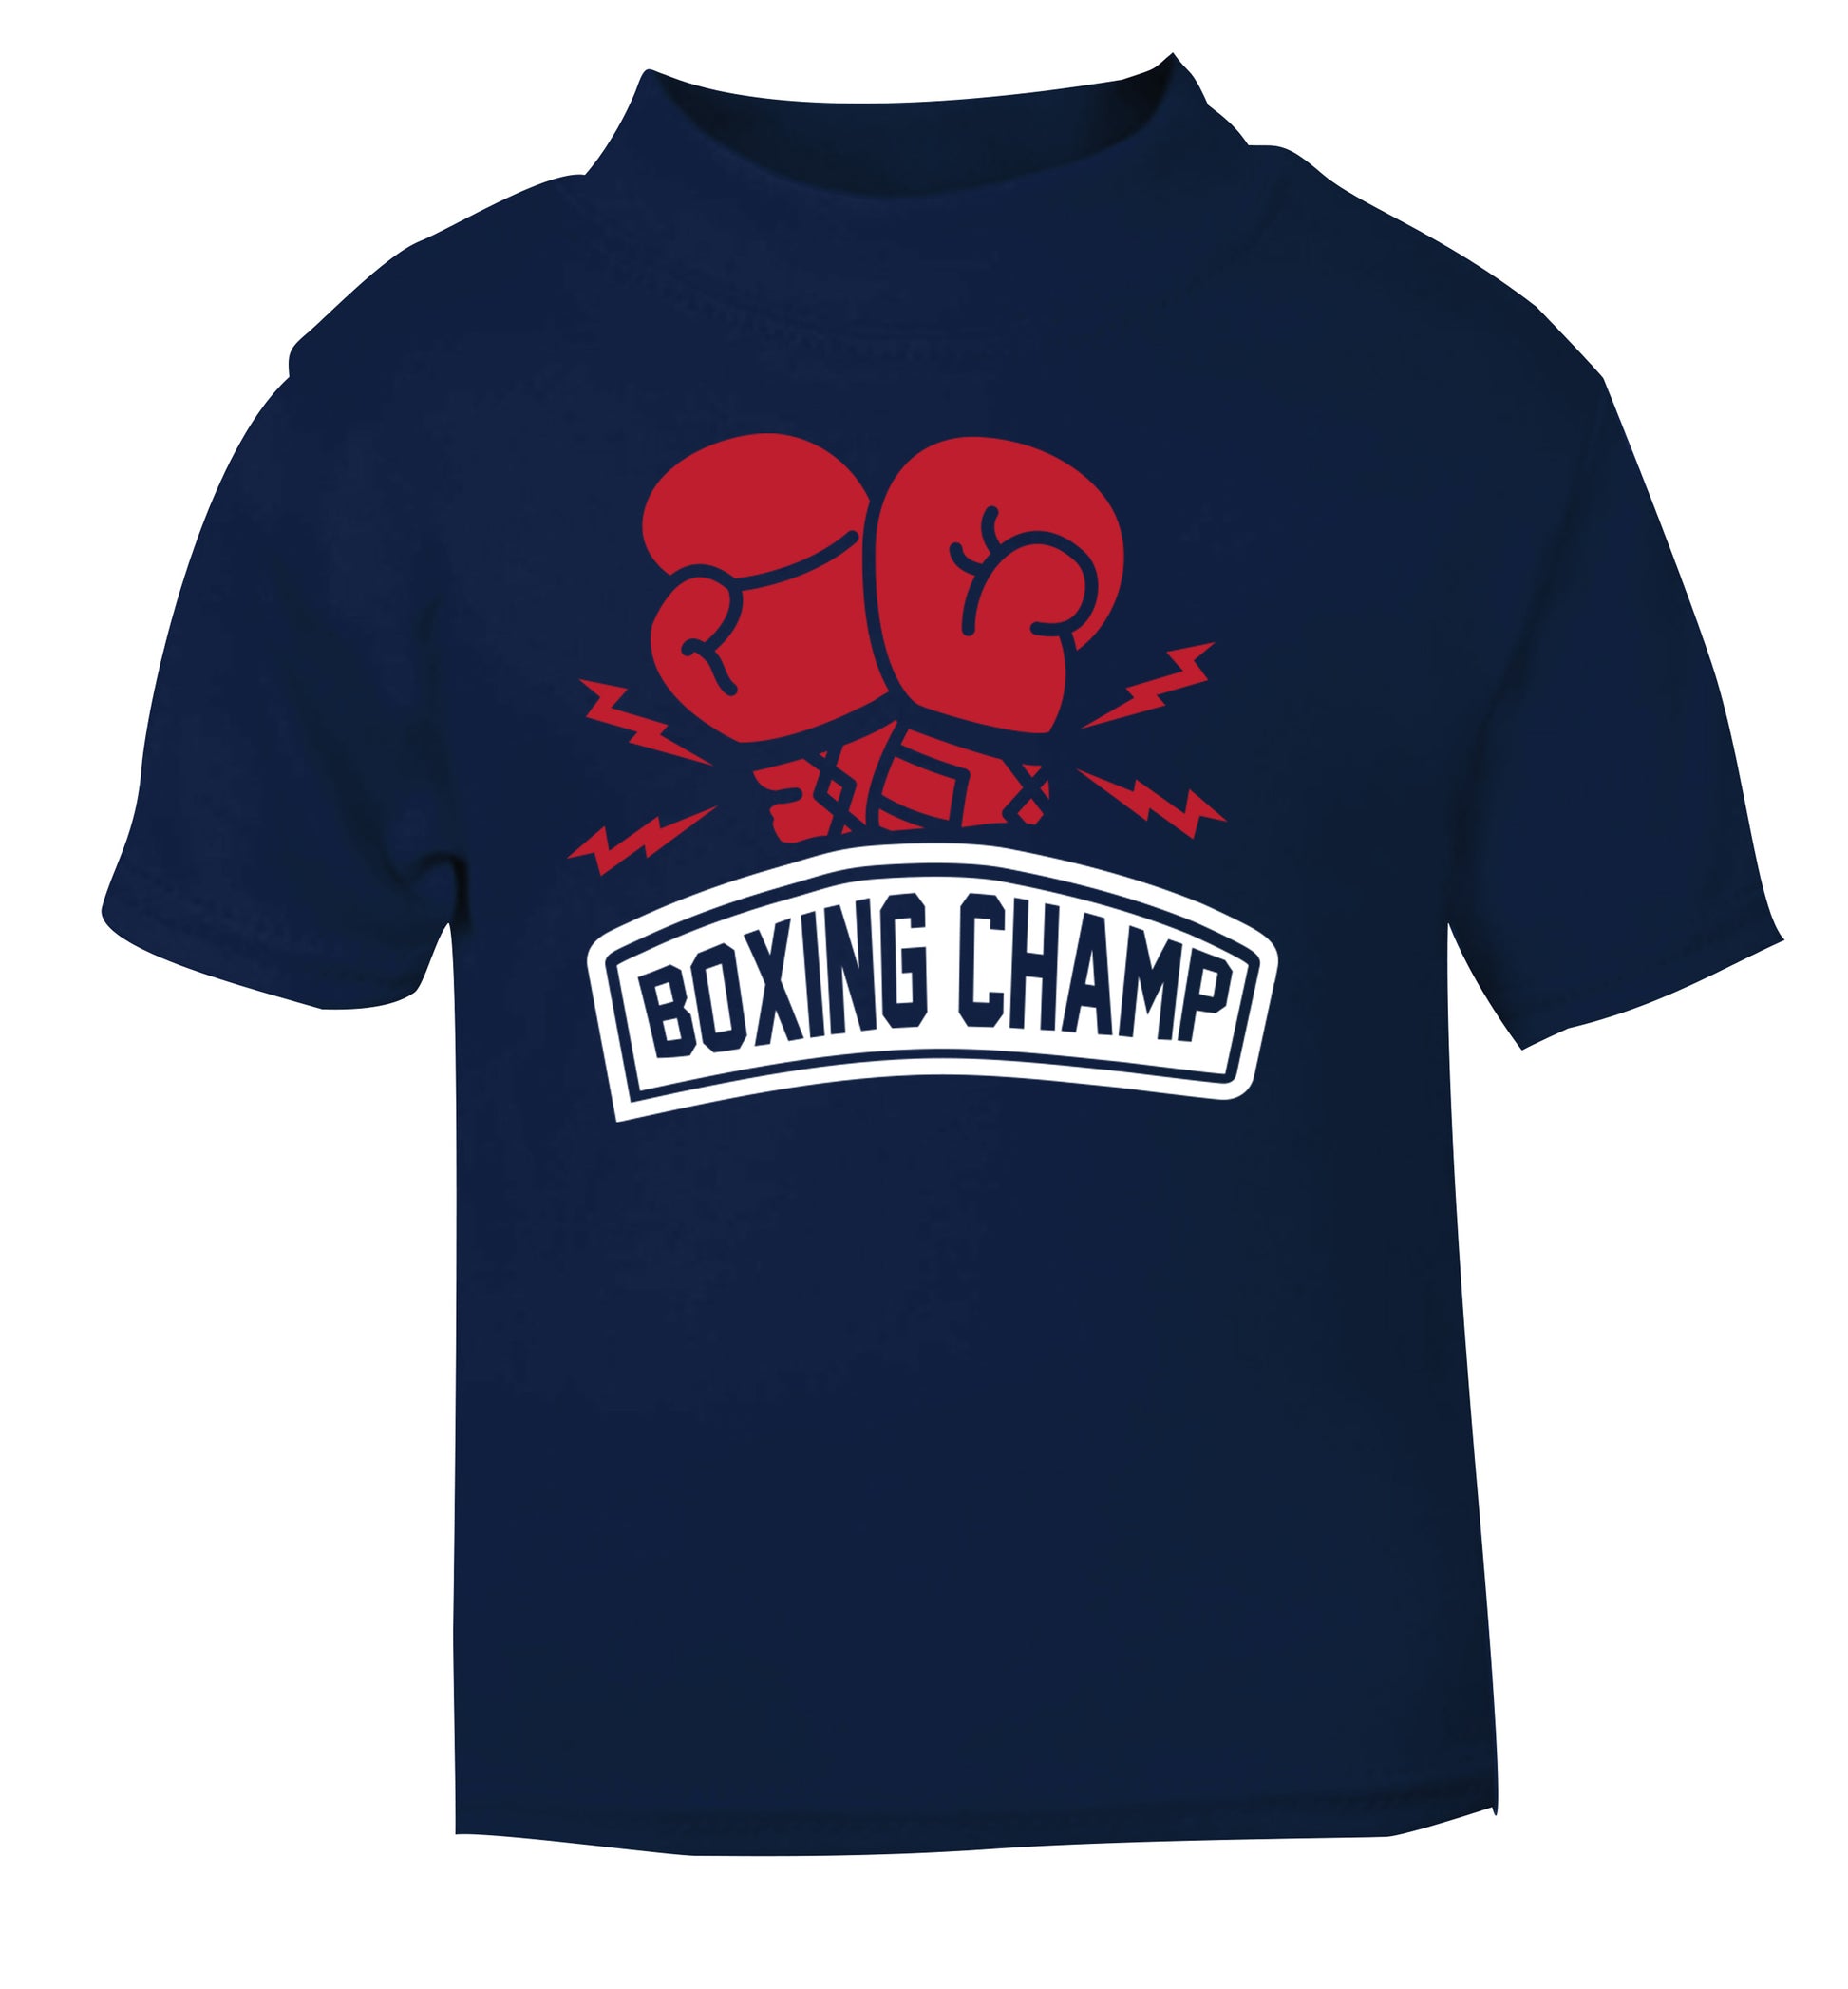 Boxing Champ navy Baby Toddler Tshirt 2 Years